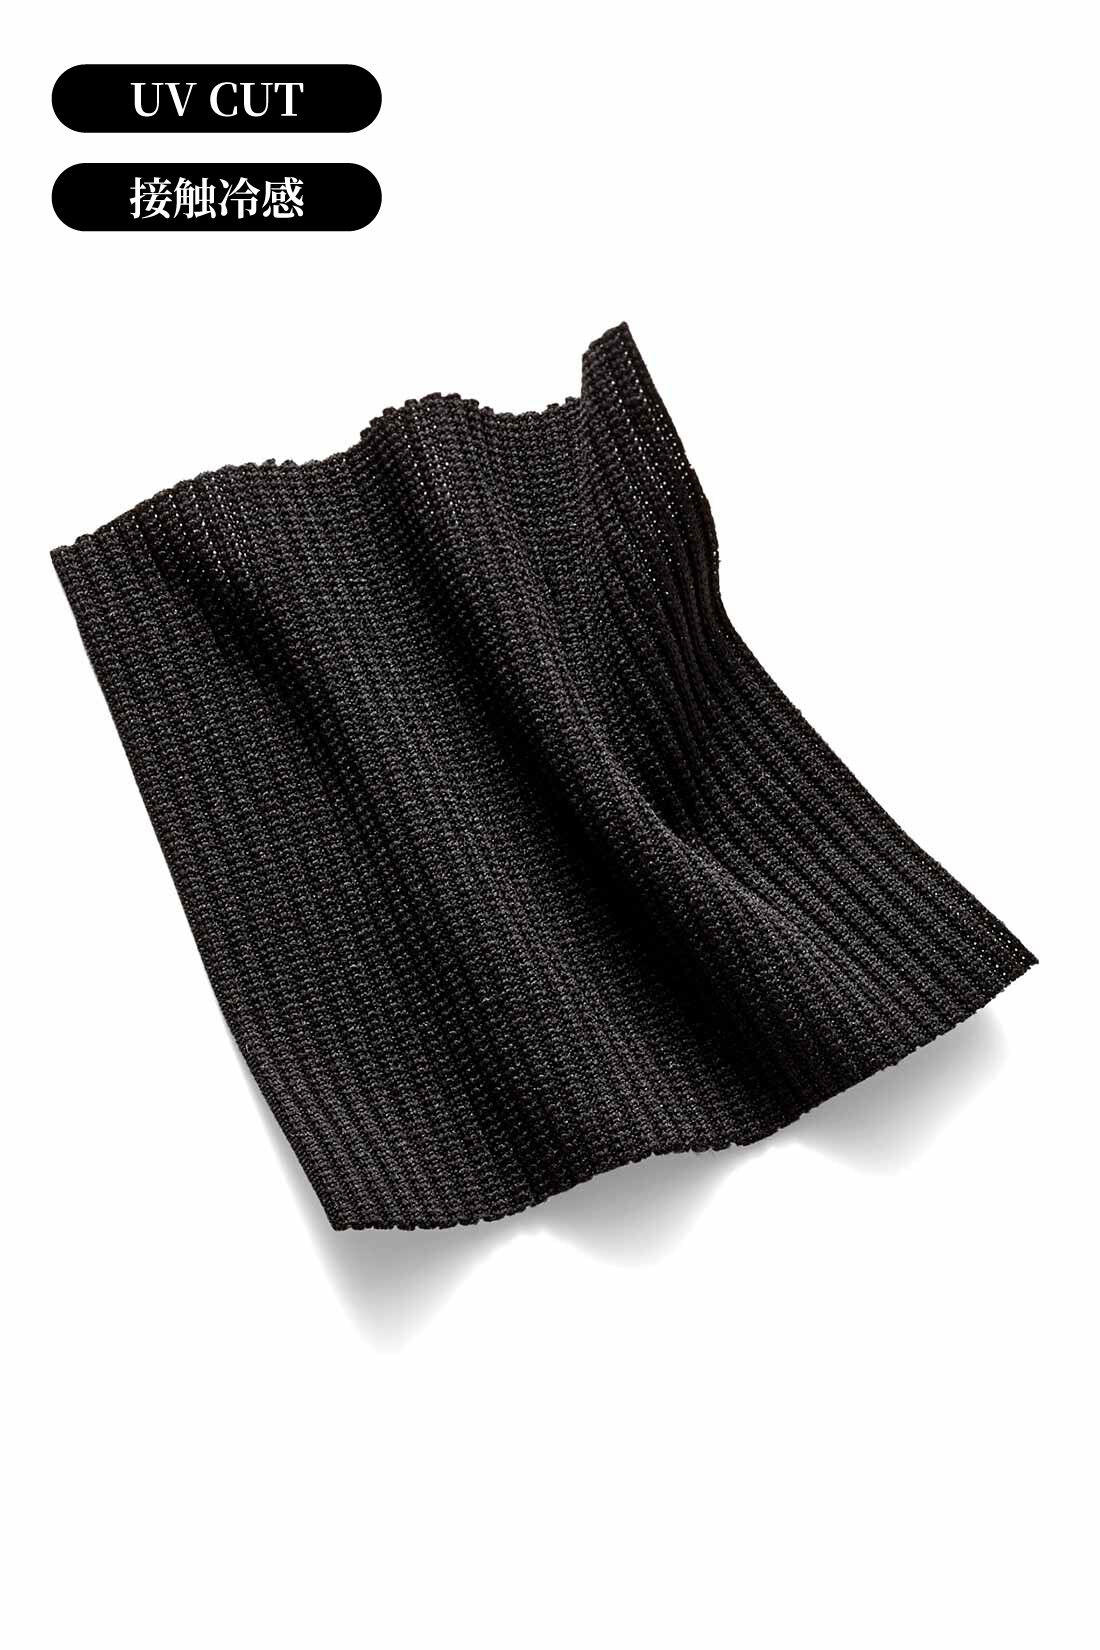 IEDIT|IEDIT[イディット]　福田麻琴さんコラボ リブ素材のレギンス〈ブラック〉|肌に張り付きにくく着心地も快適なストレッチのきいた細めリブ素材。洋服のように着られる上品なブラック。